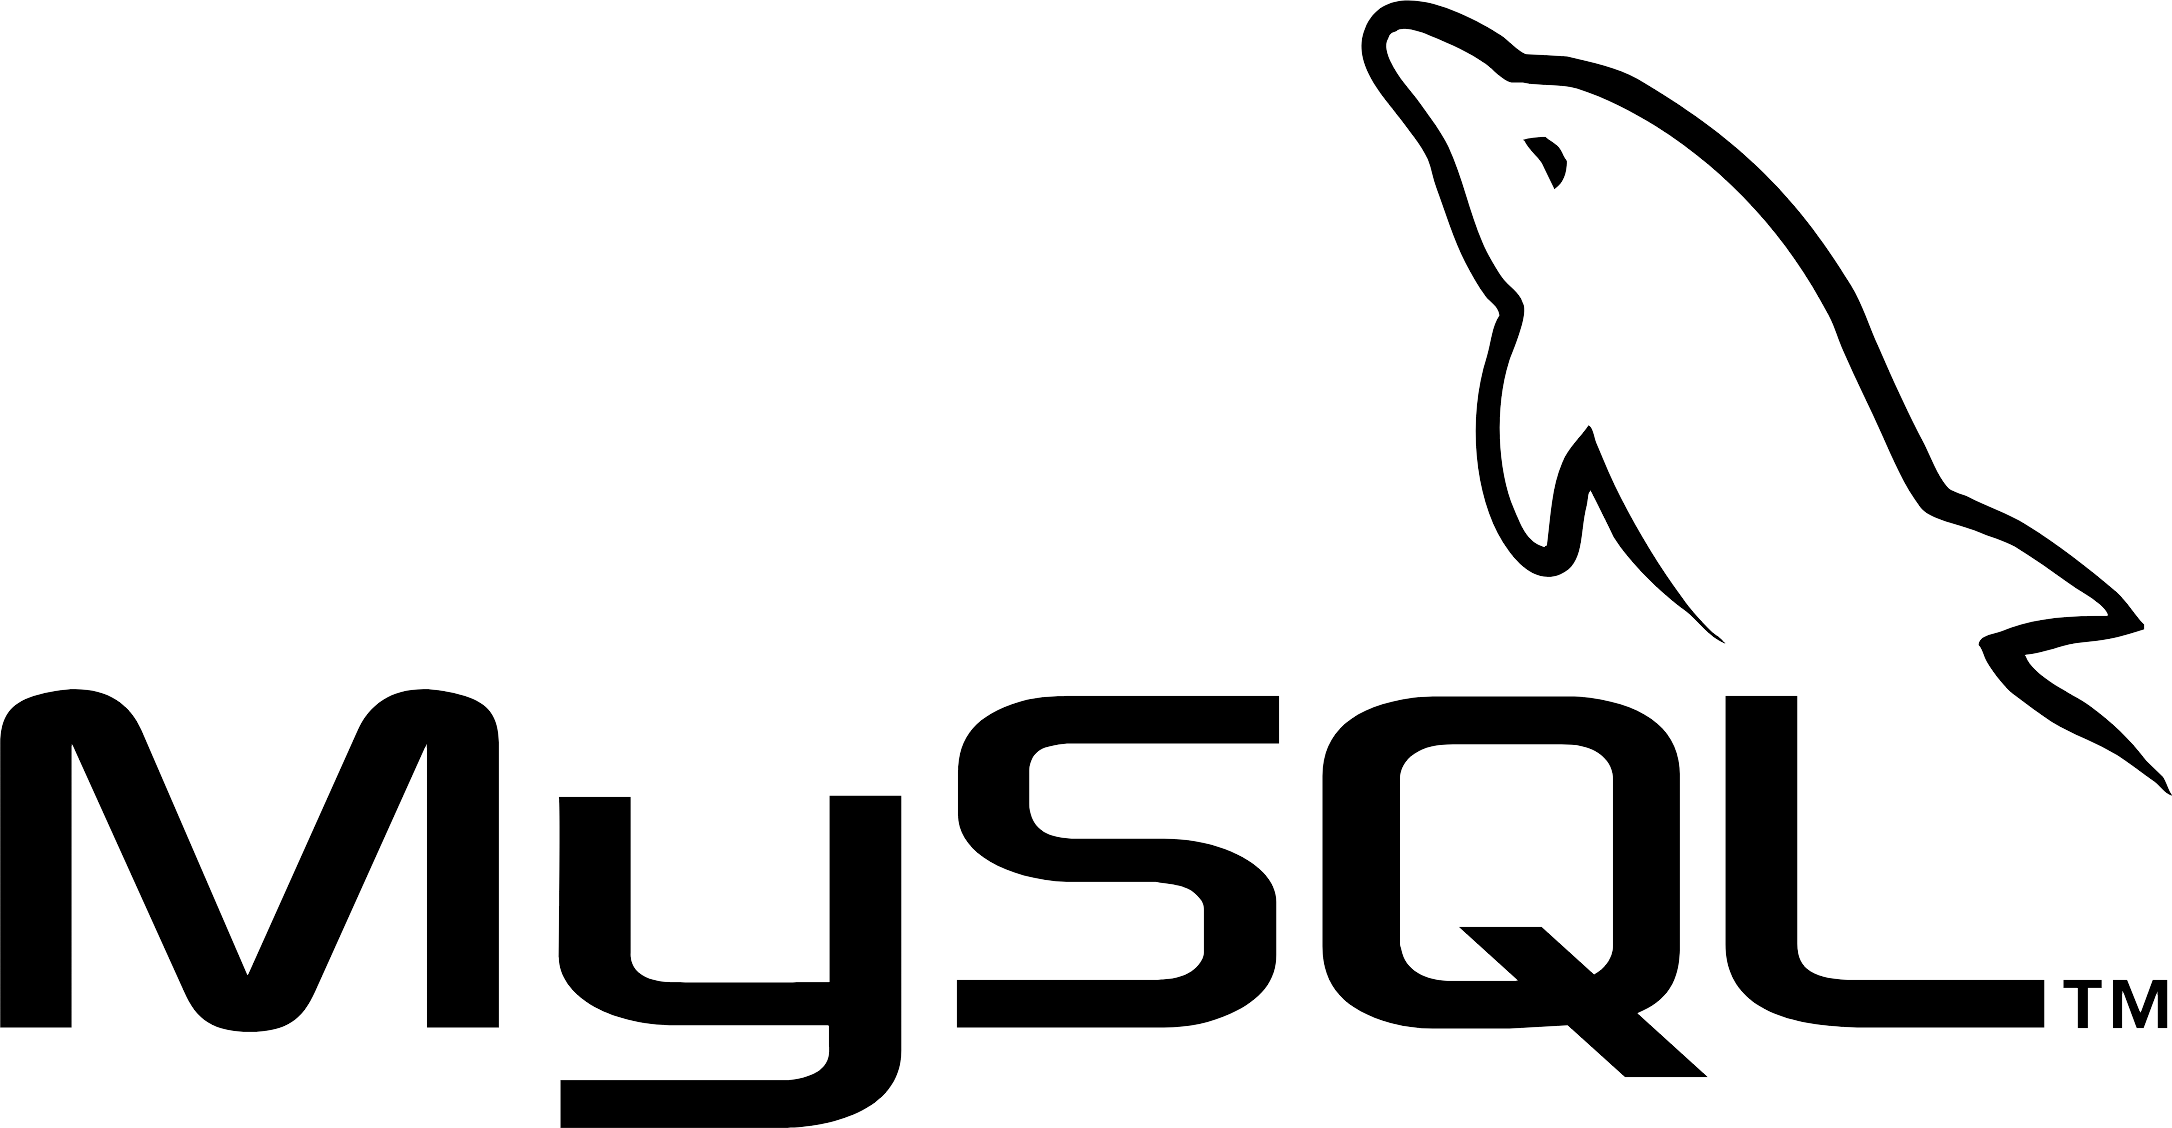 Logotipo do MySQL